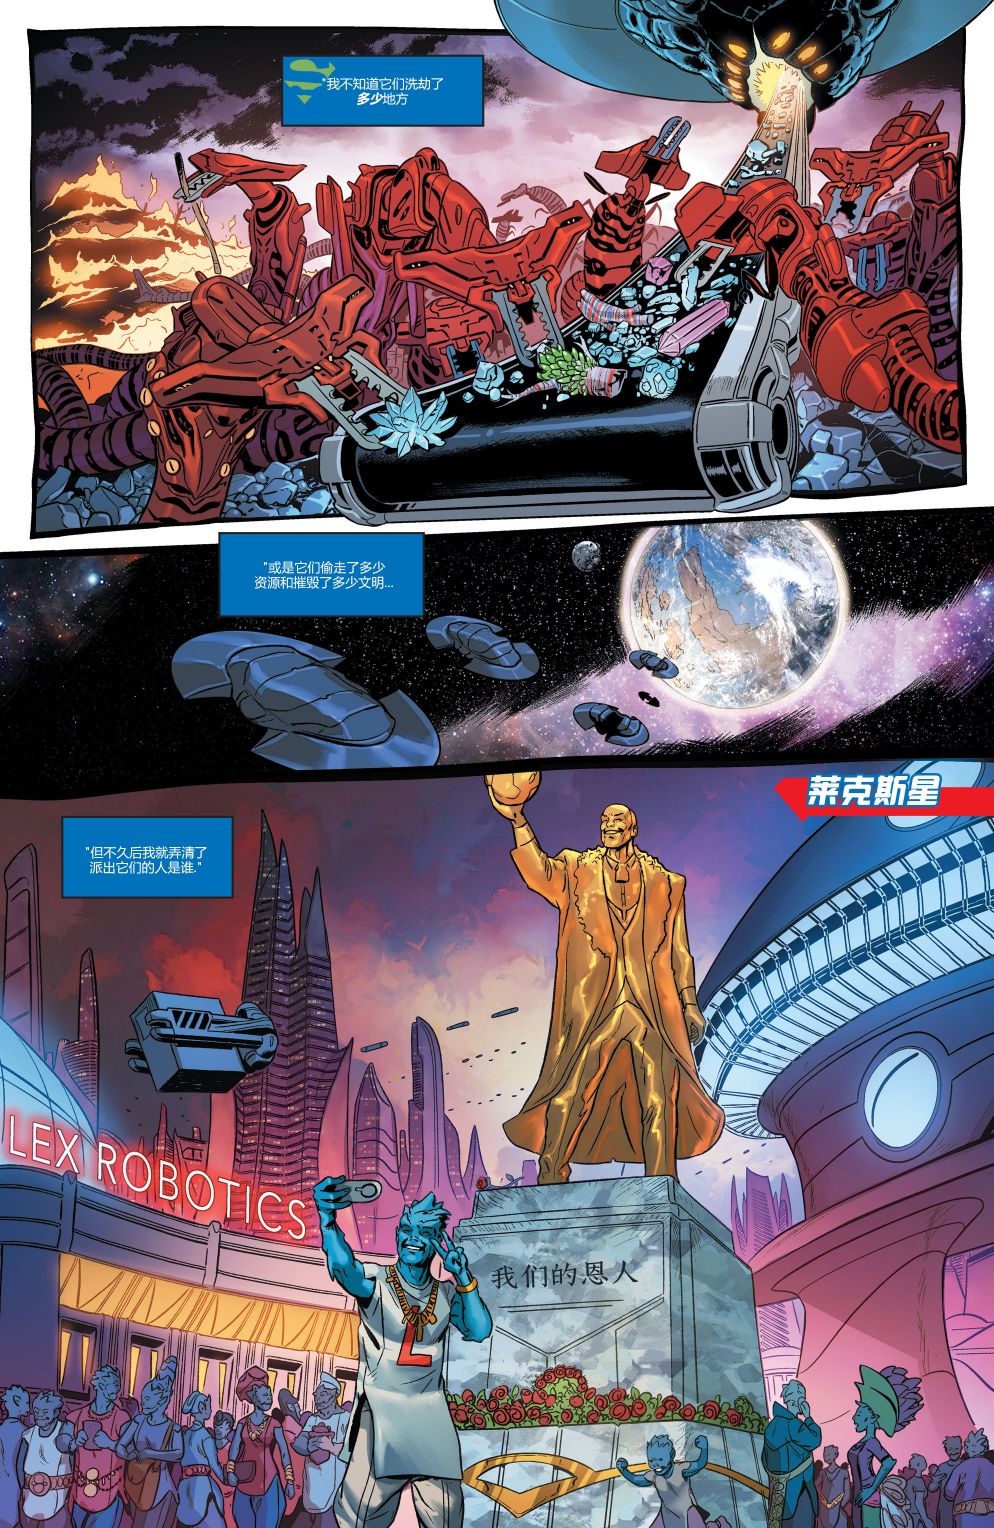 DC未來態 - 超人大戰霸王萊克斯 - 2